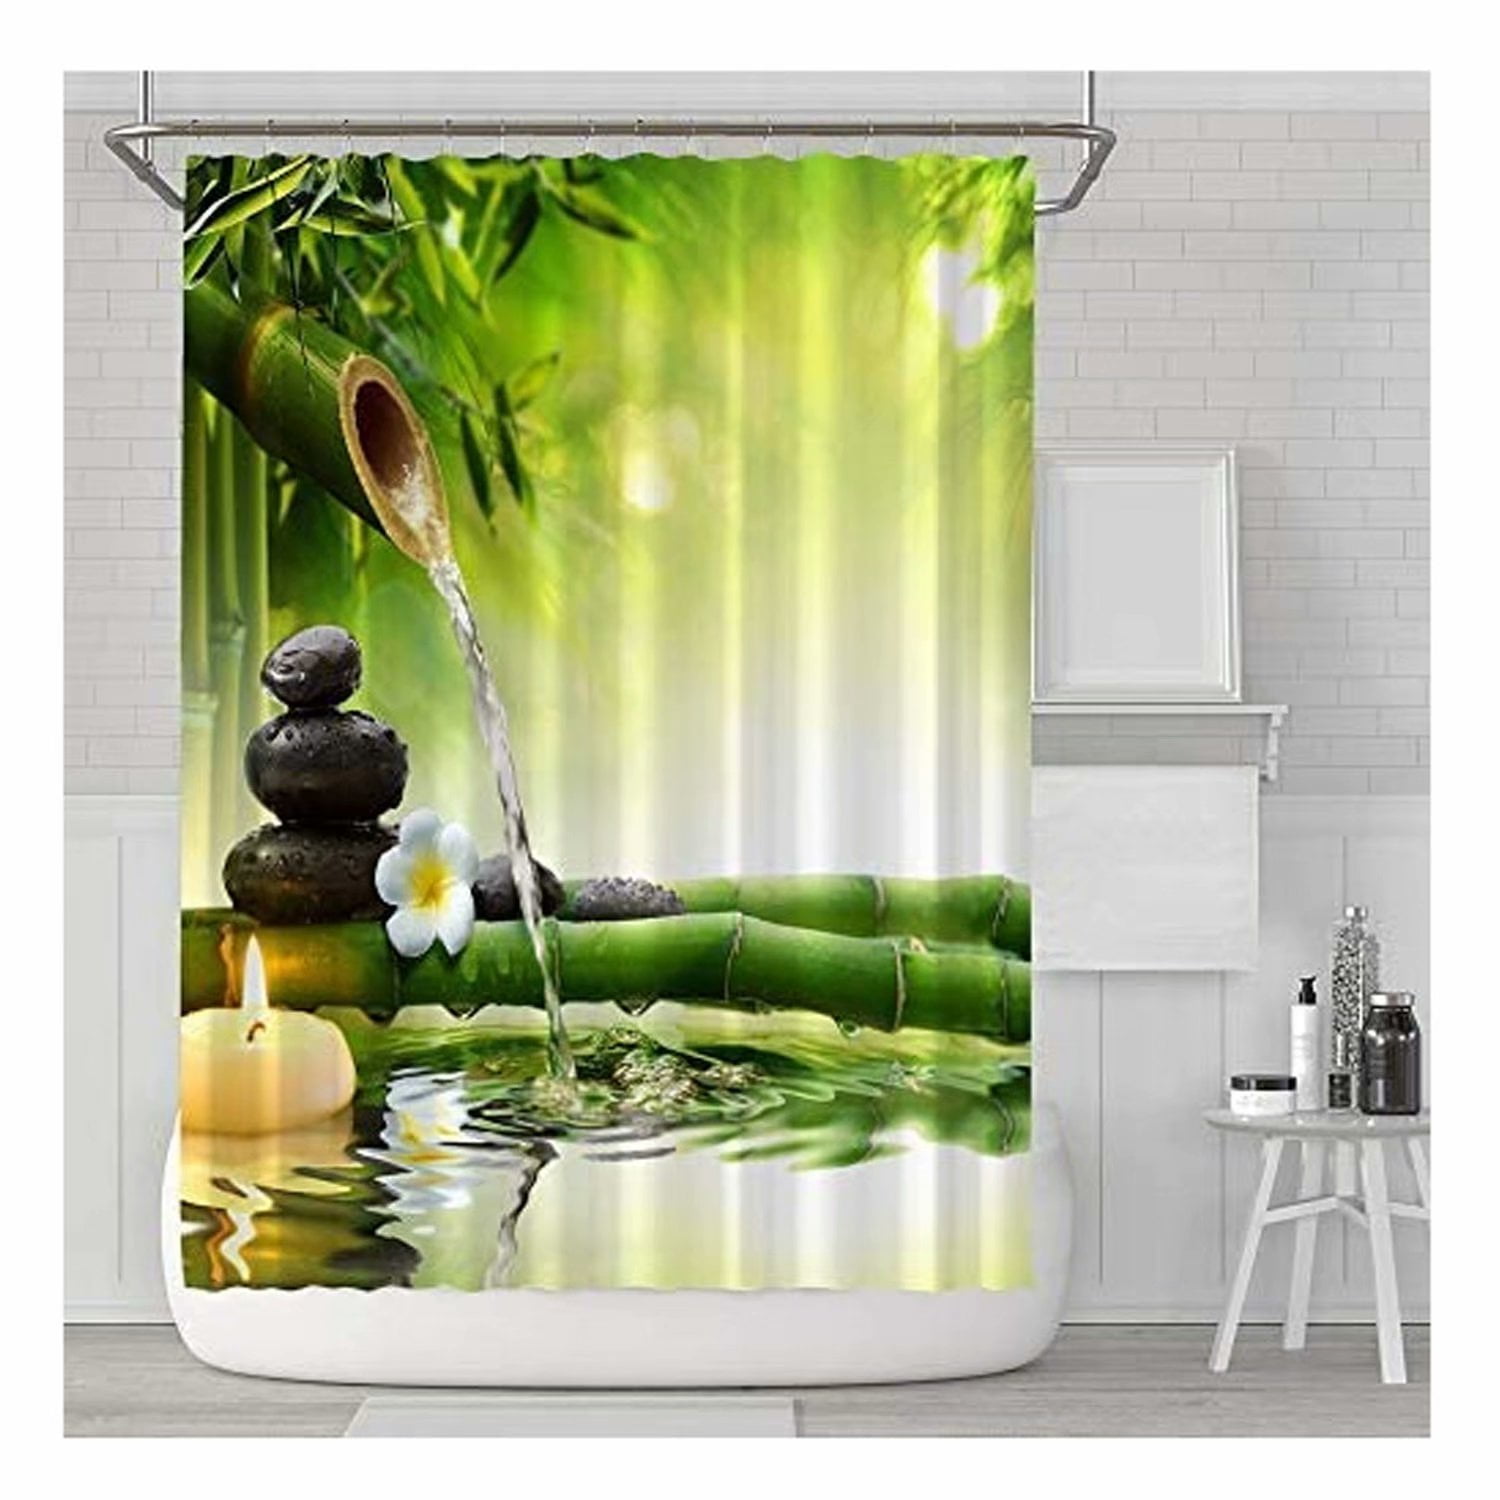 Bathroom Fabric Shower Curtain Curtains With Hooks Machine Washable 180 x 180cm 